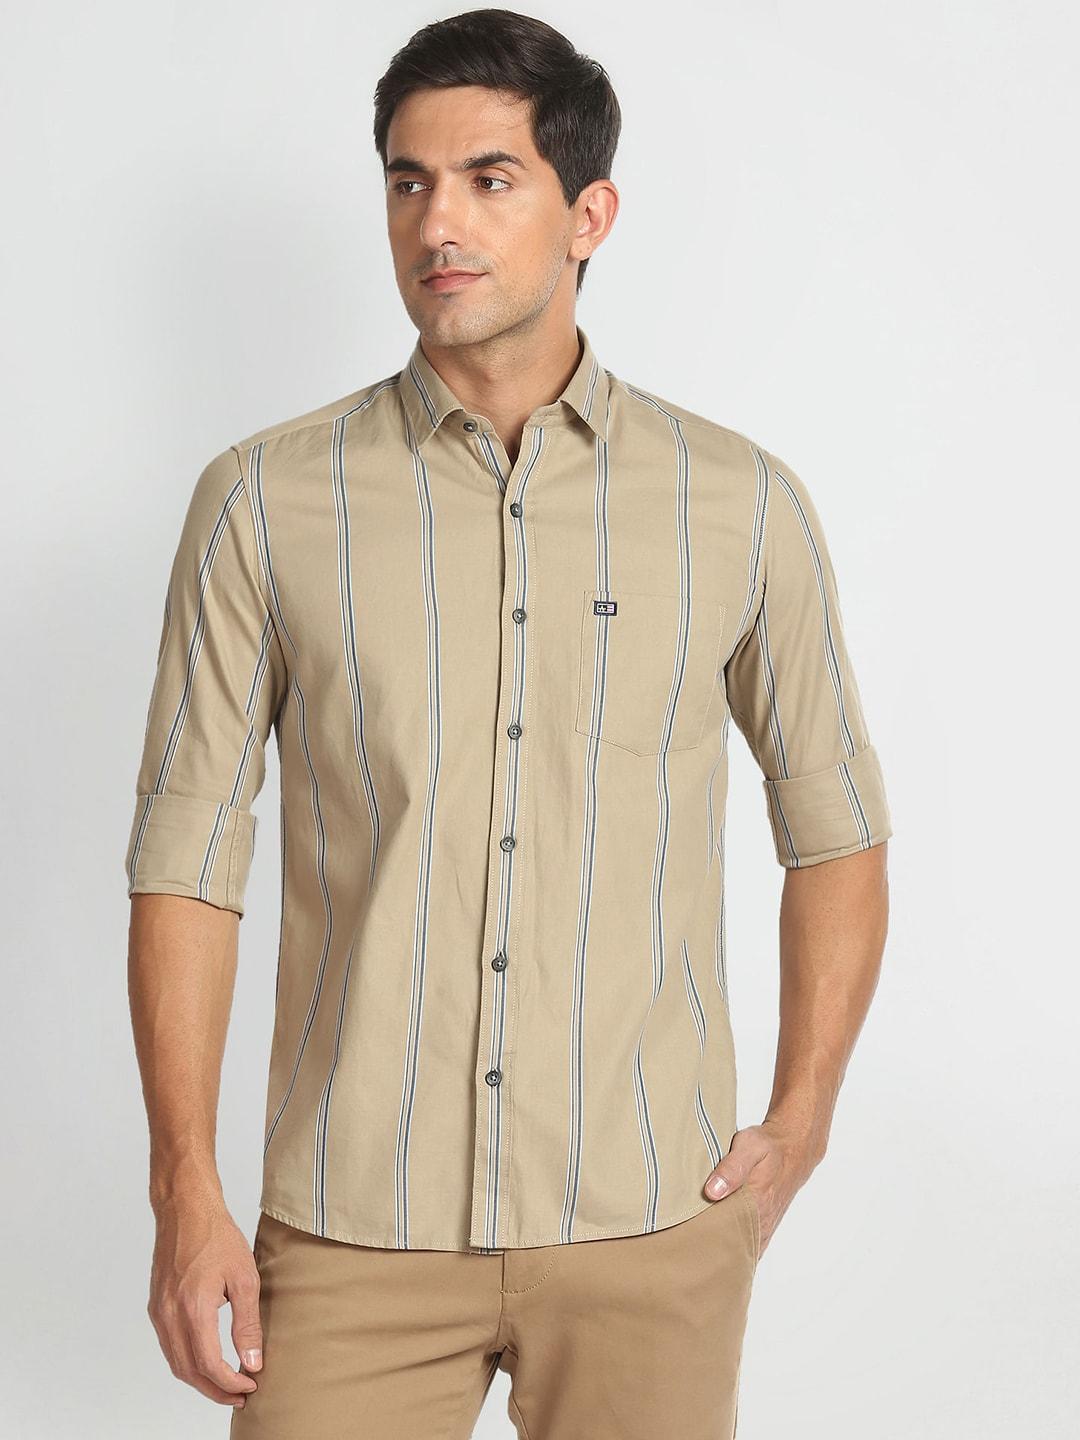 arrow sport pure cotton manhattan slim fit striped casual shirt